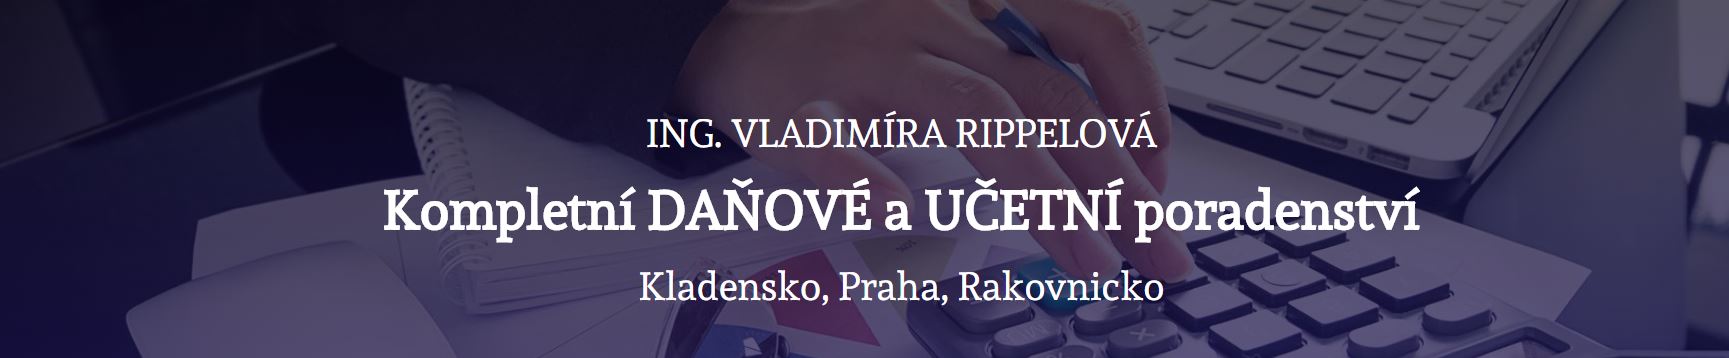 Daňový poradce pro klienty z oblasti Kladno, Praha, Slané, Rakovník